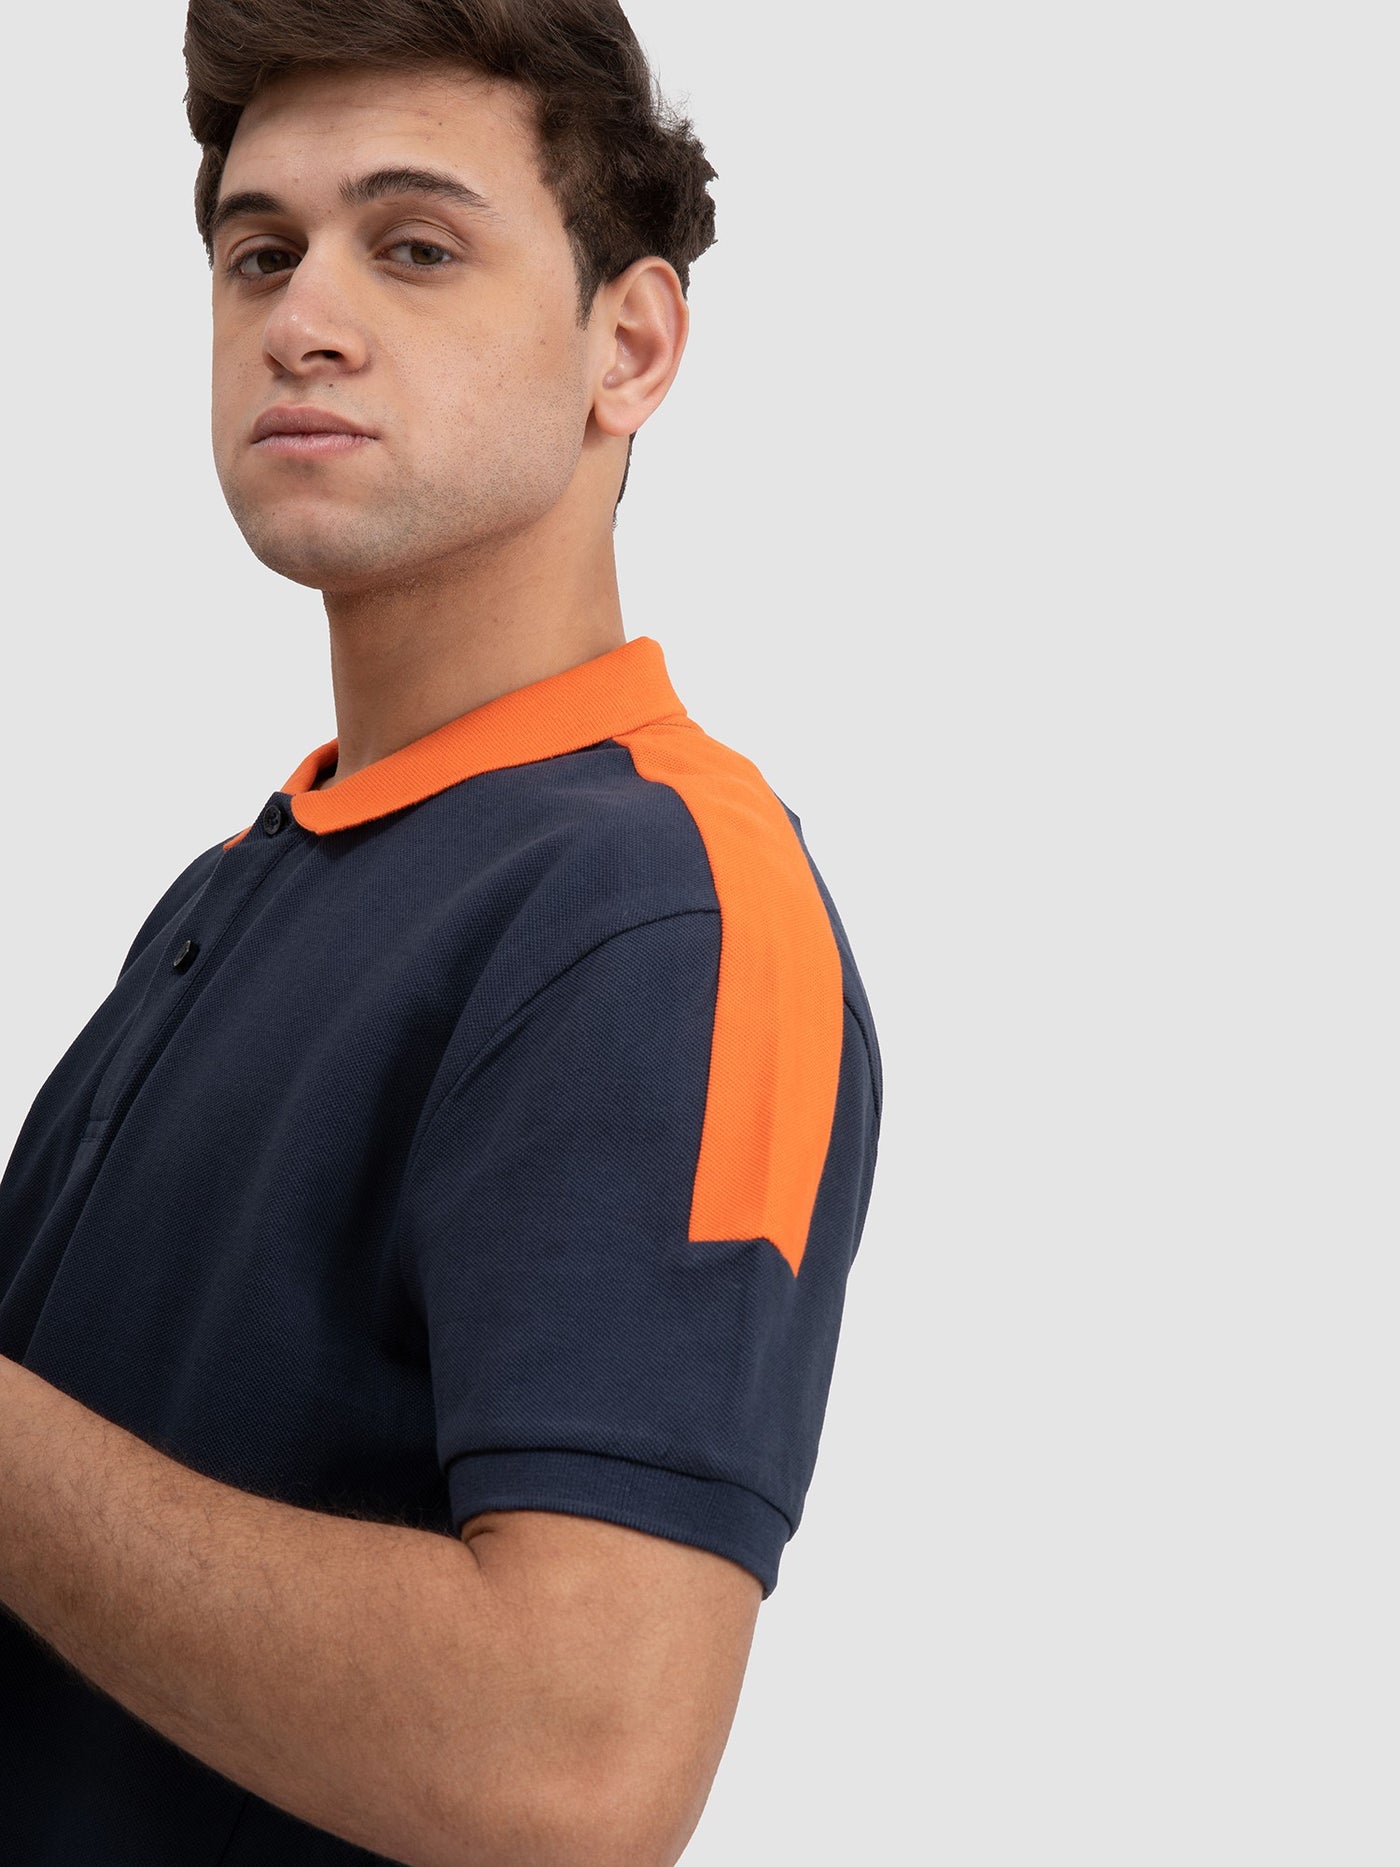 Premoda Mens Contrasting Collar and Shoulder  Polo Shirt